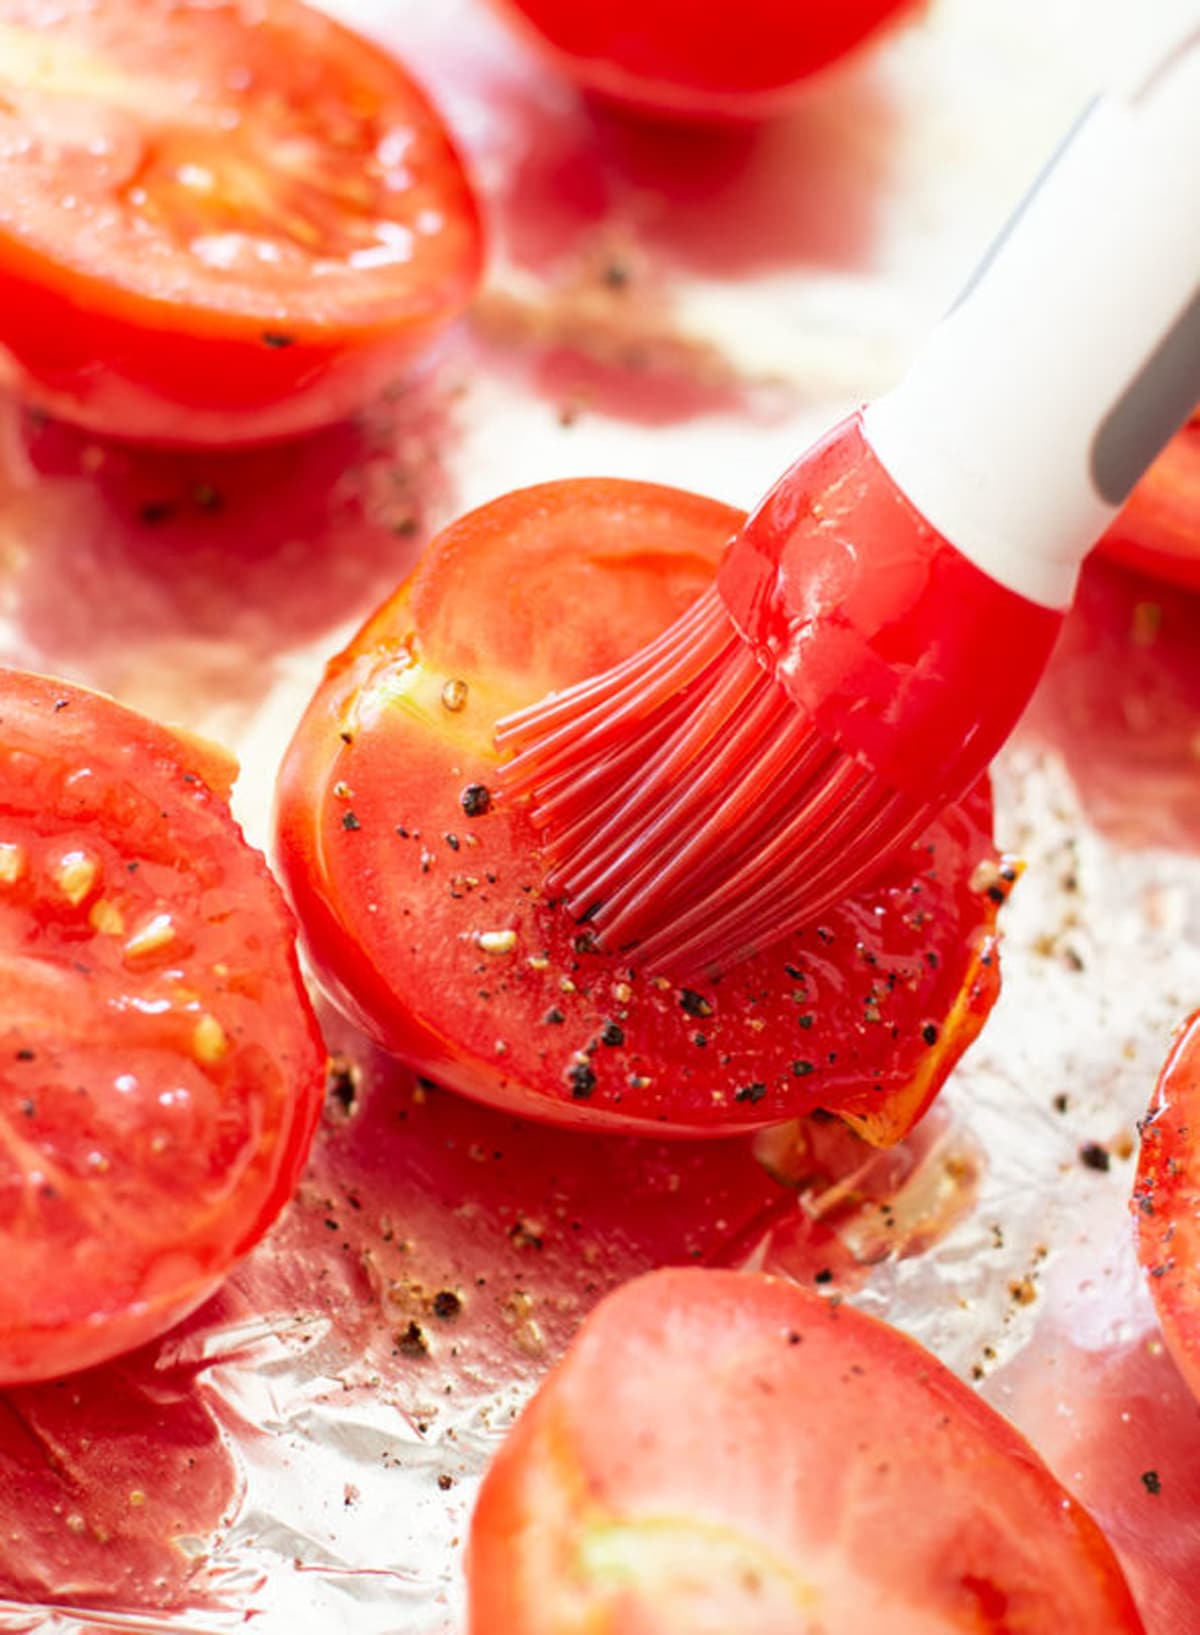 Basting olive oil onto tomato.